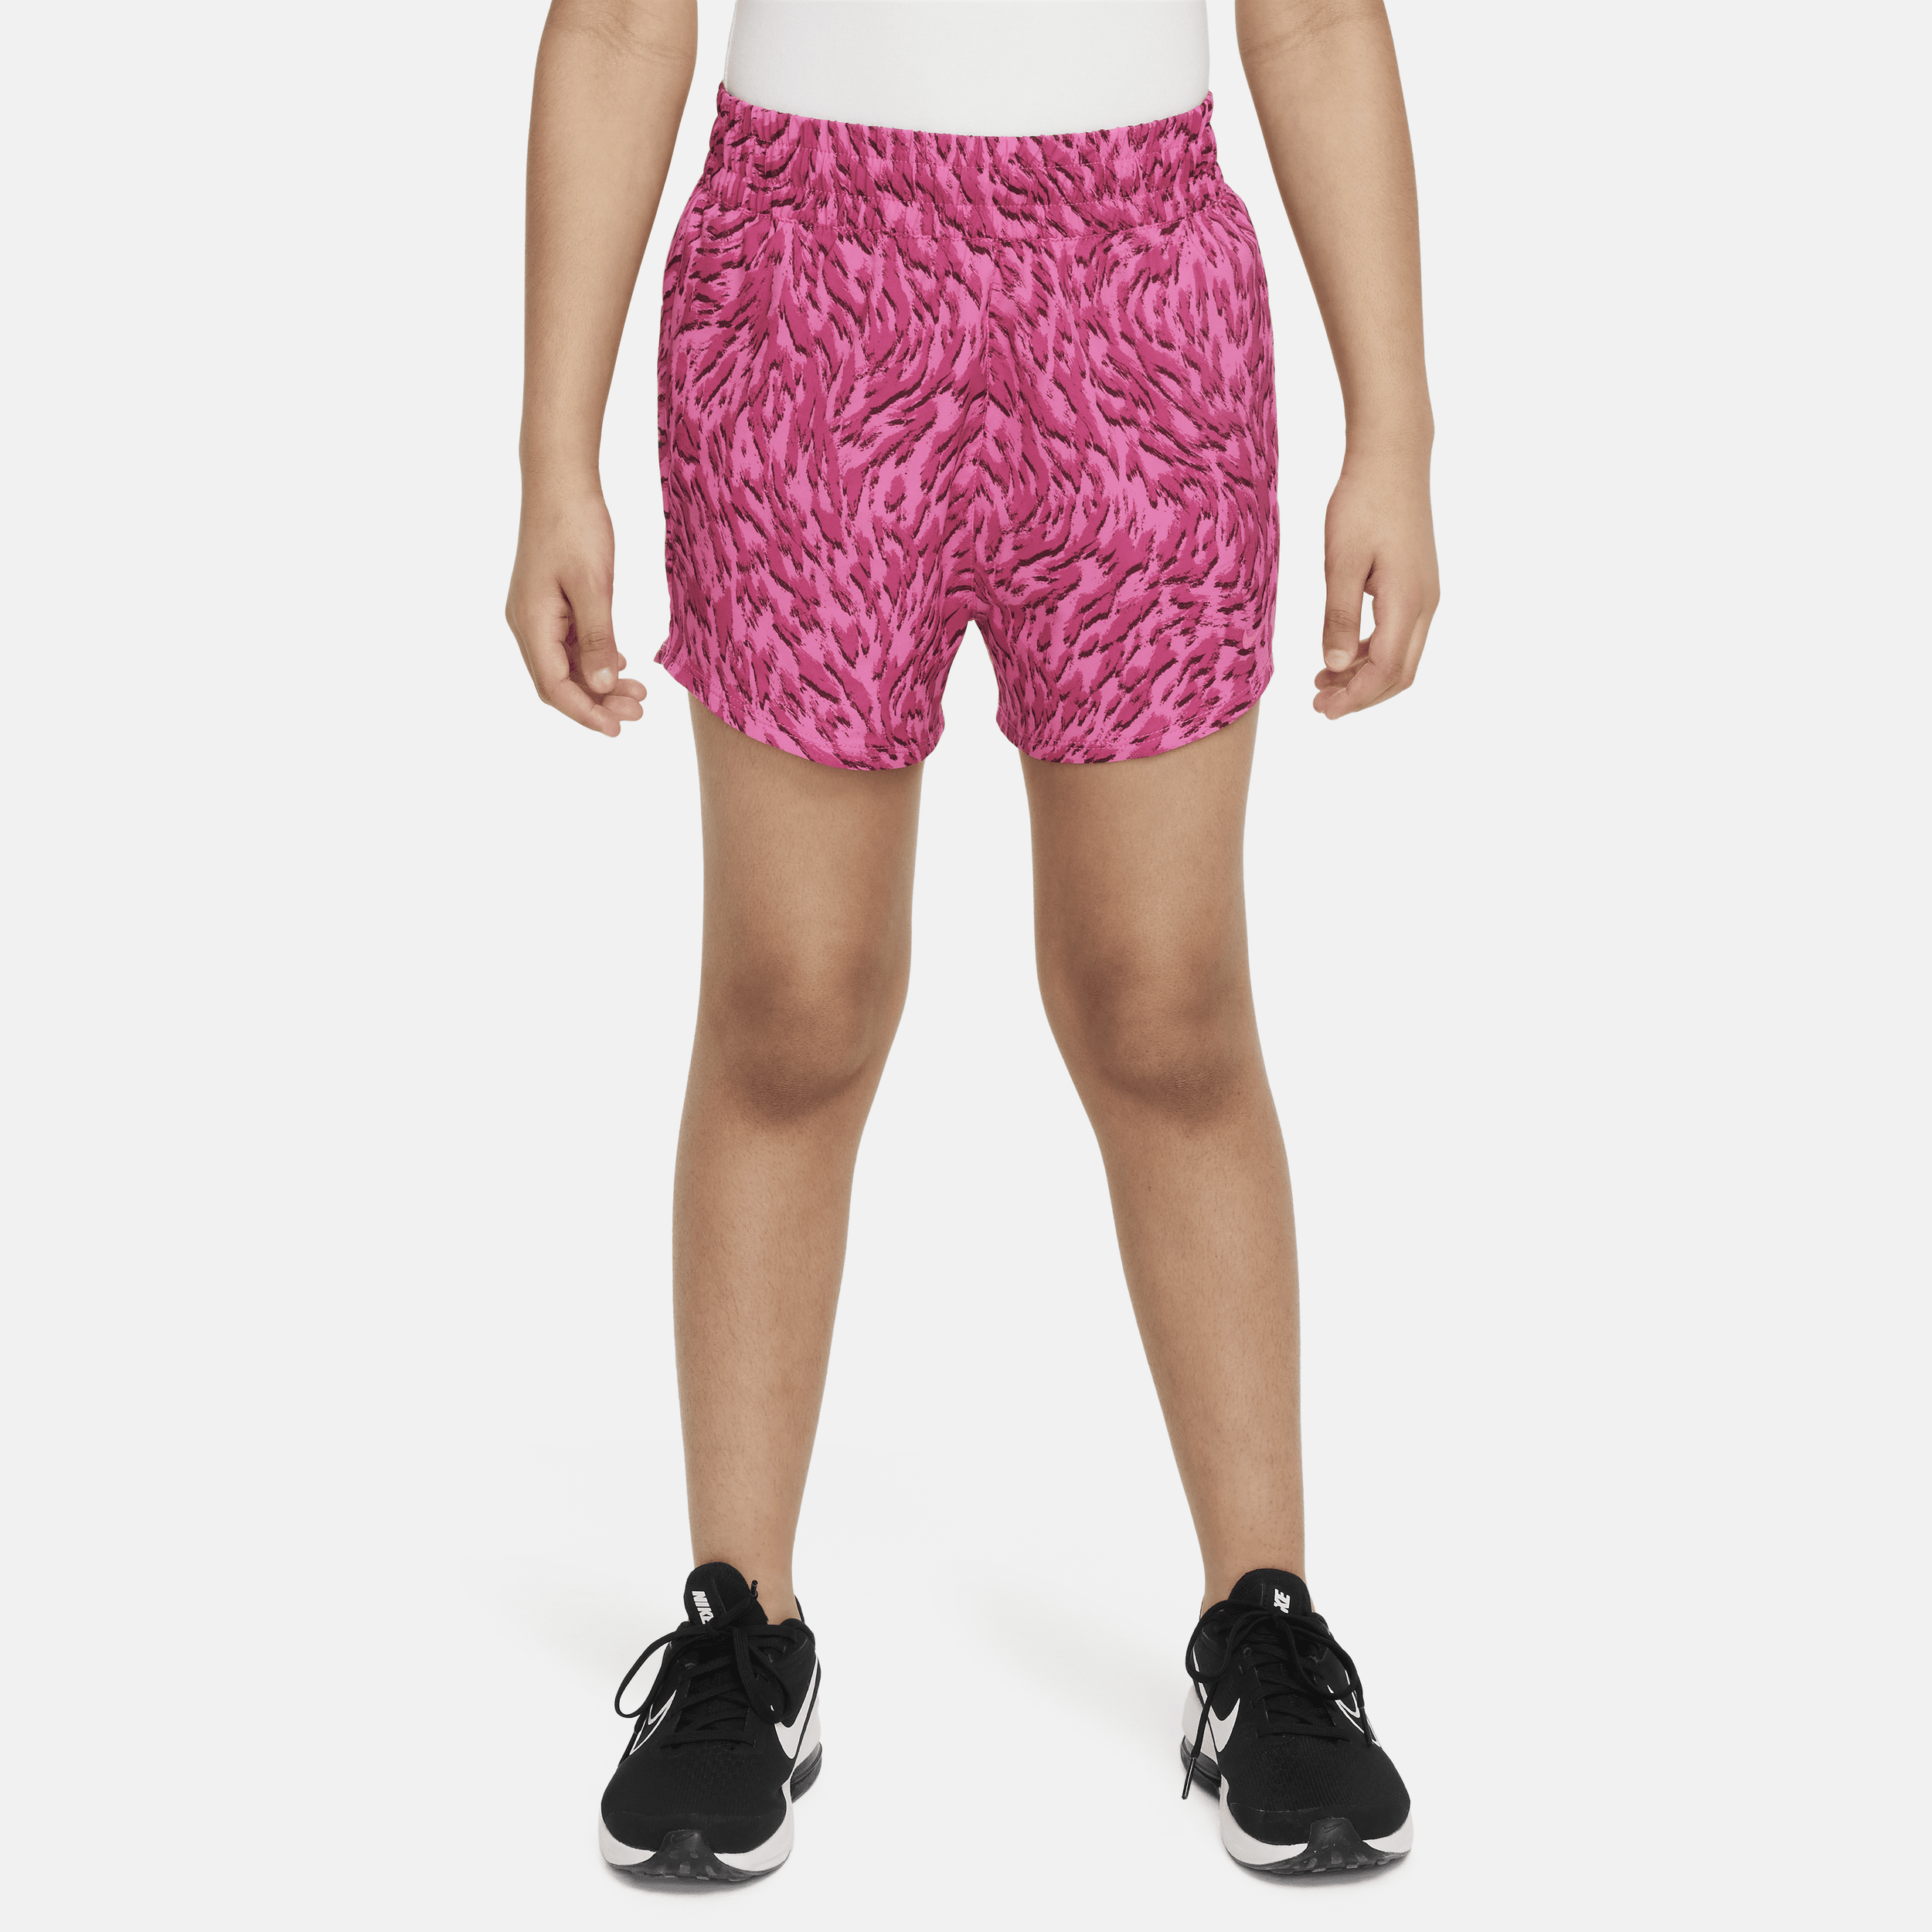 Nike One geweven shorts met hoge taille voor meisjes - Rood